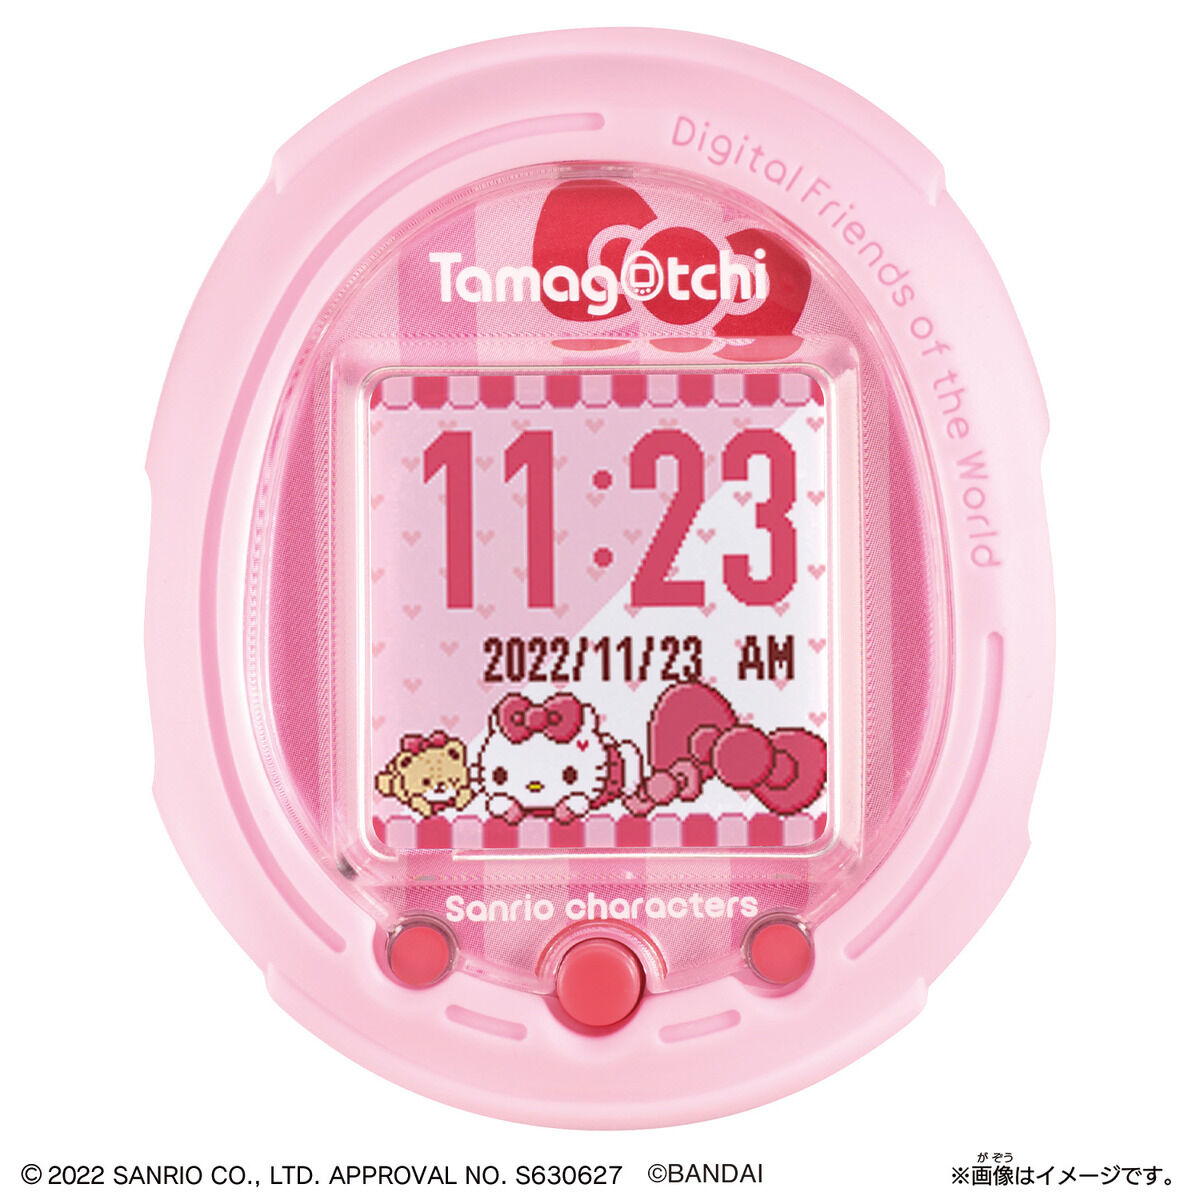 Tamagotchi Smart サンリオキャラクターズ スペシャルセット | BANDAI TOYS